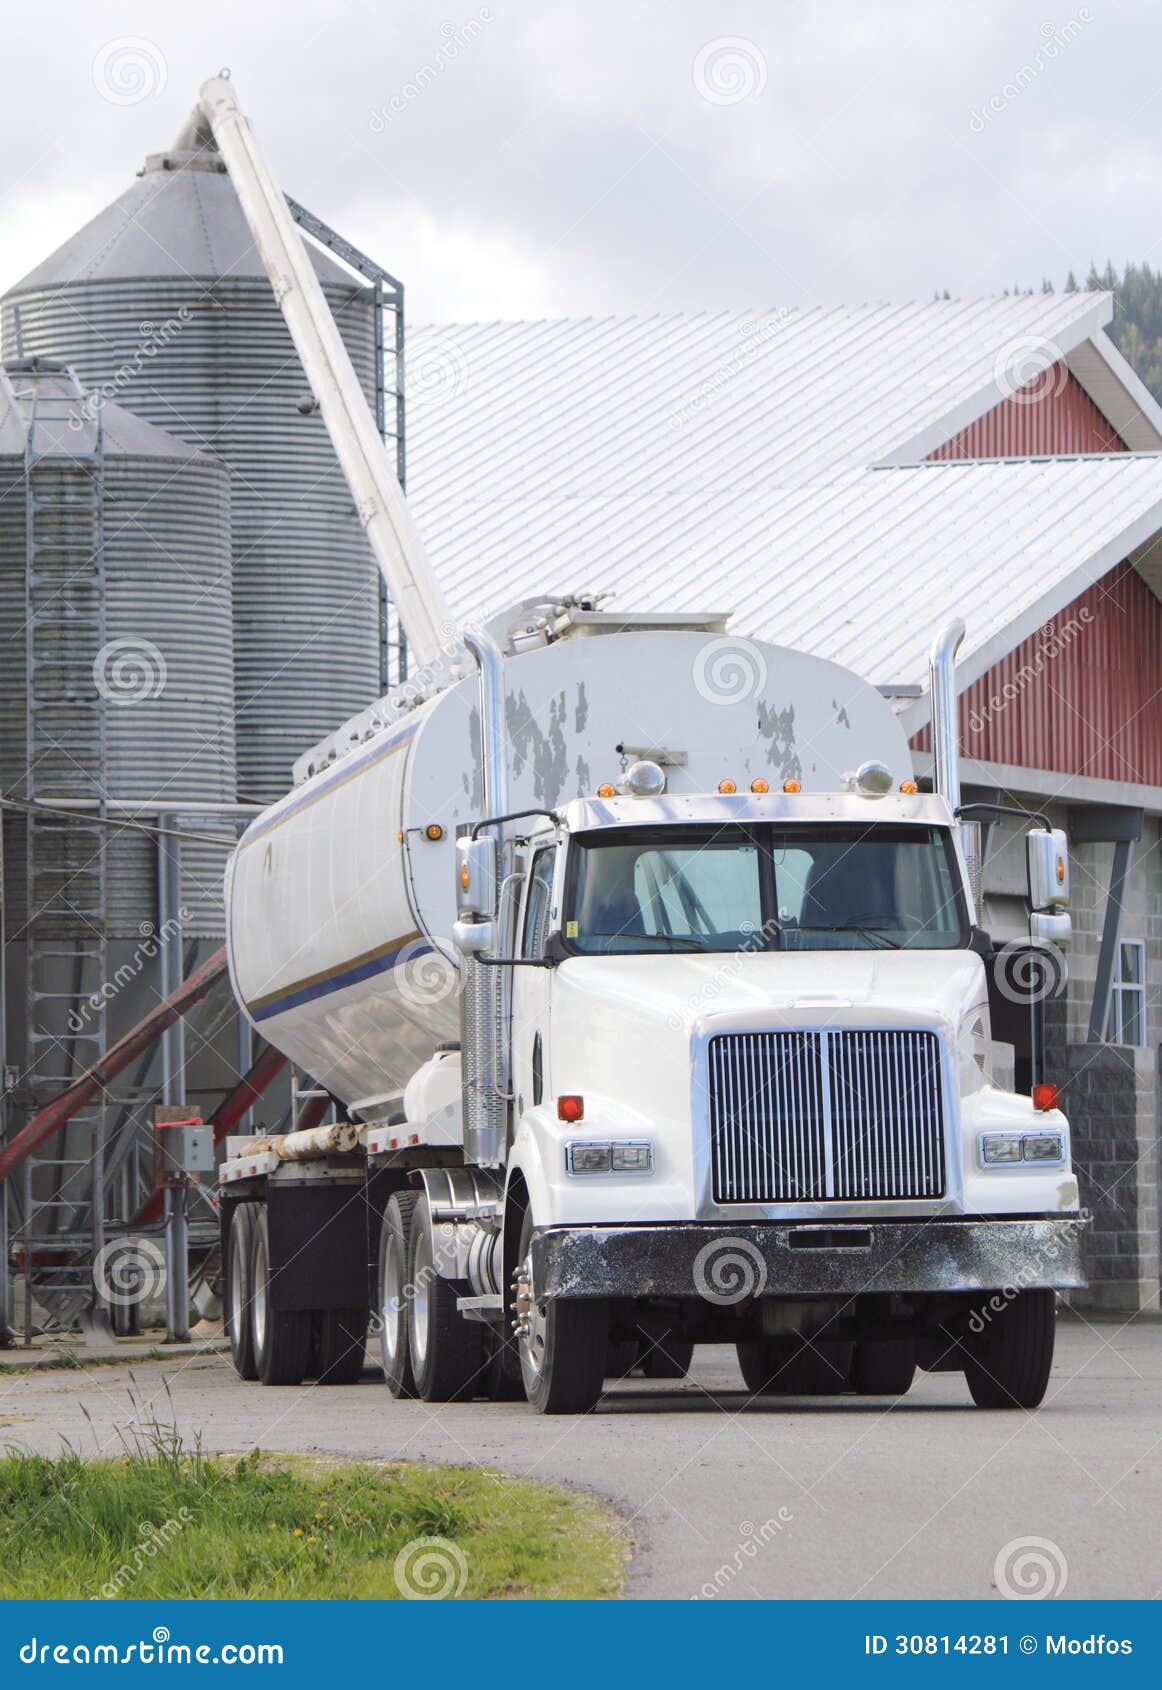 Supplying Grain Bin. A truck delivers feed into a giant bin on a farm.